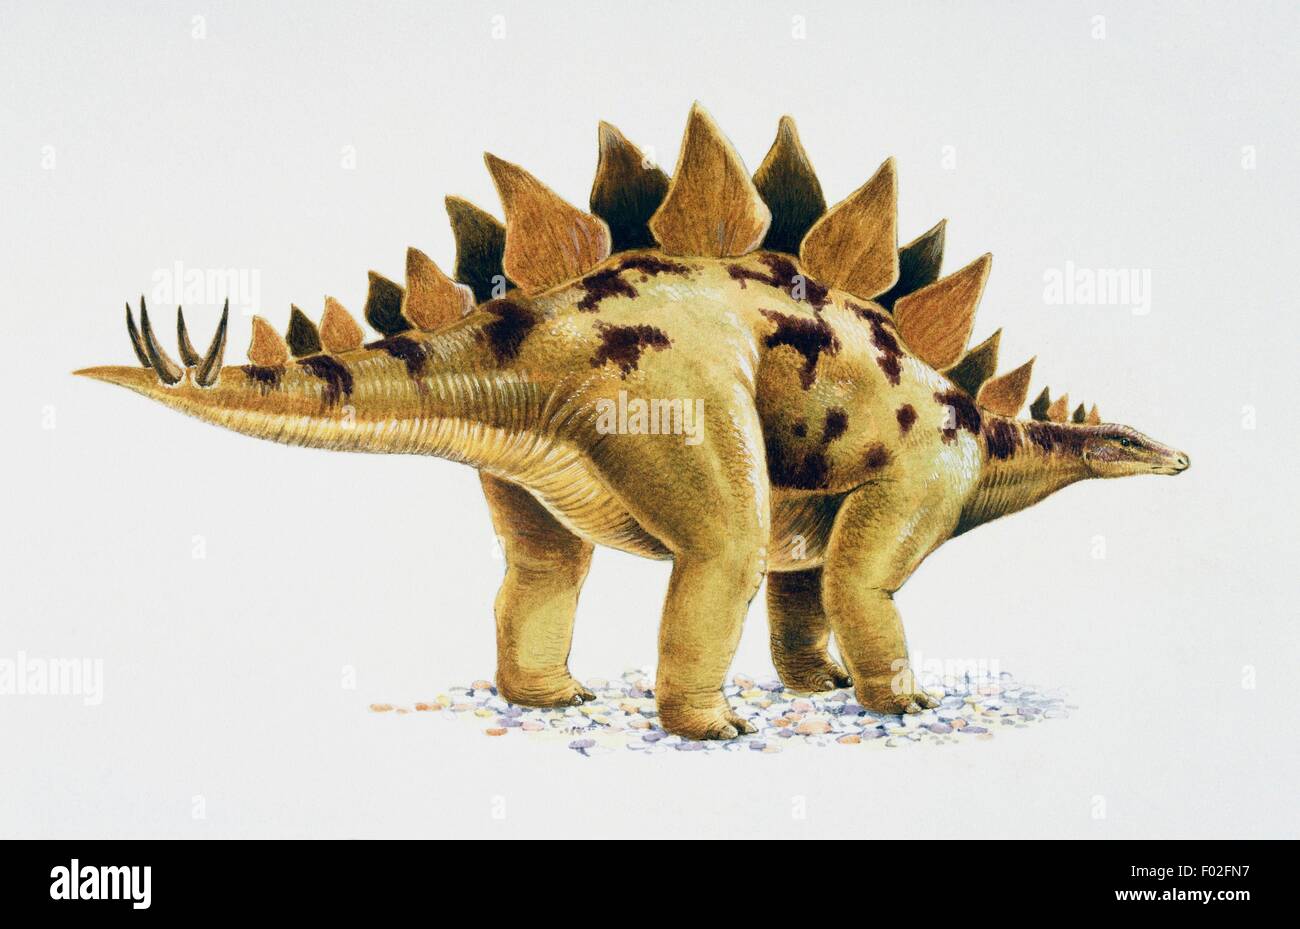 Stegosaurus sp, Stegosauridae, Late Jurassic. Artwork by Nick Pike. Stock Photo